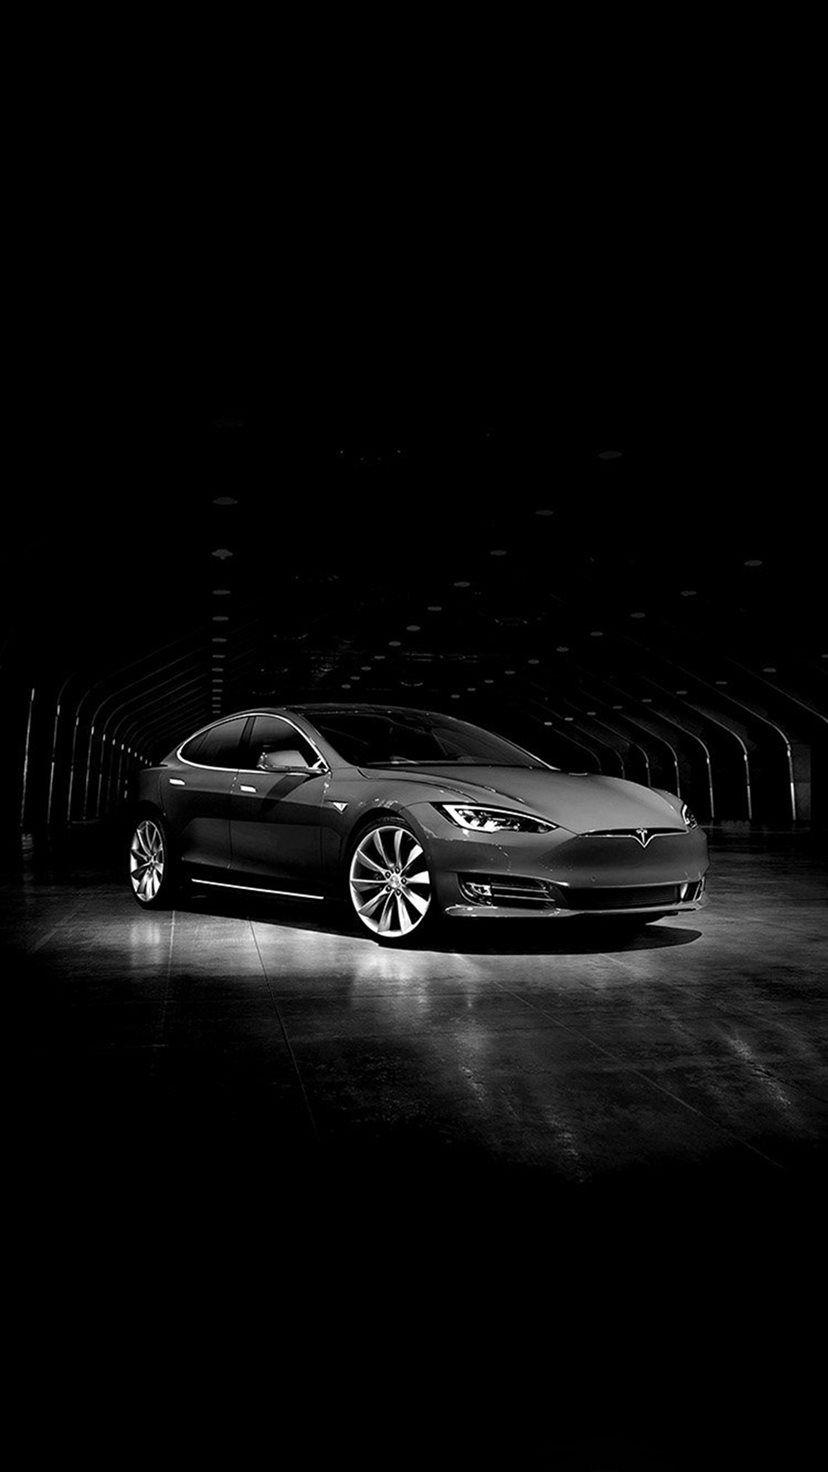 Tesla Model Concept Dark Bw Car iPhone 8 wallpaper. Car